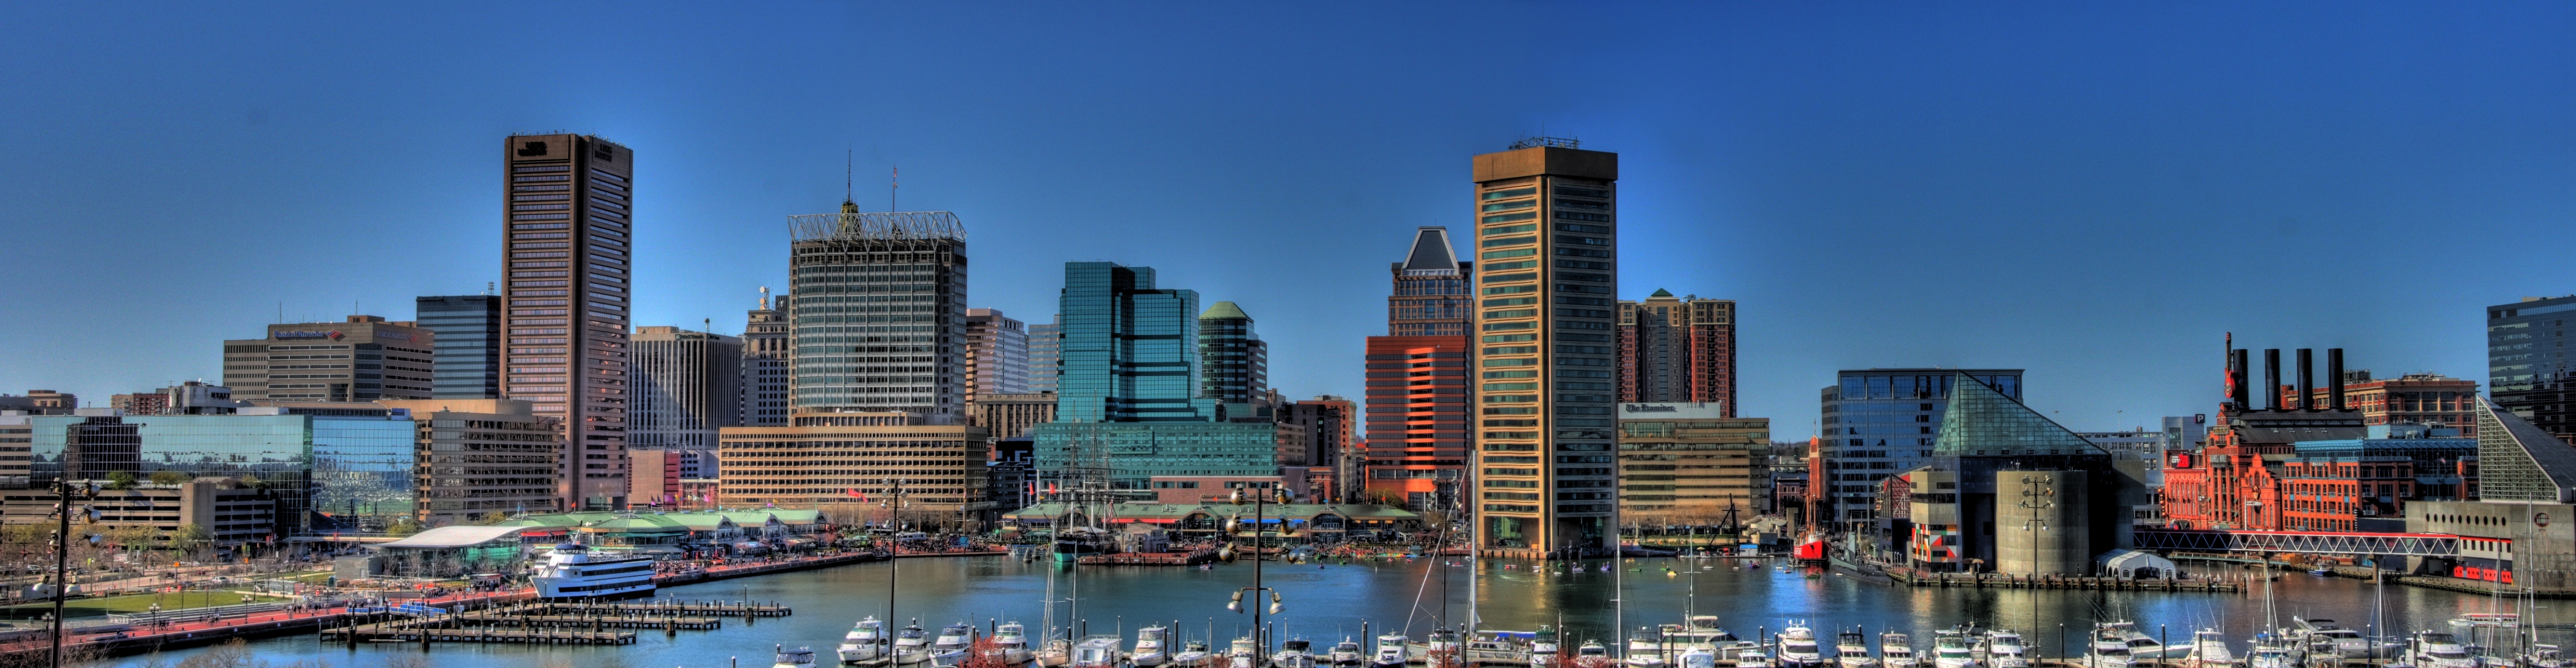 Baltimore City Desktop Wallpaper